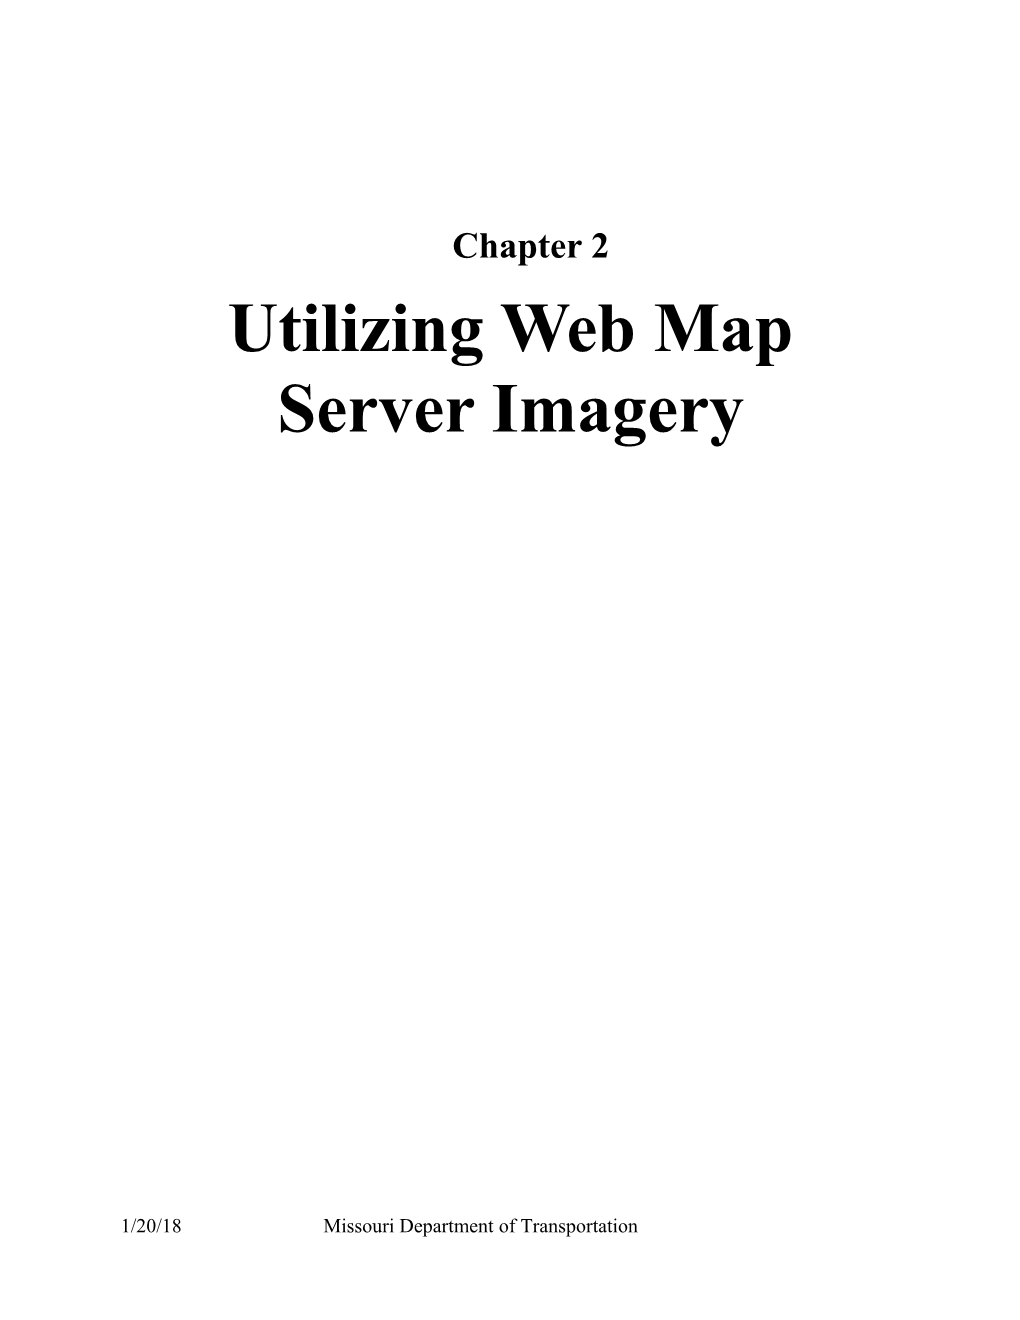 Microstation Chapter 2 Utilizing Web Map Server Imagery